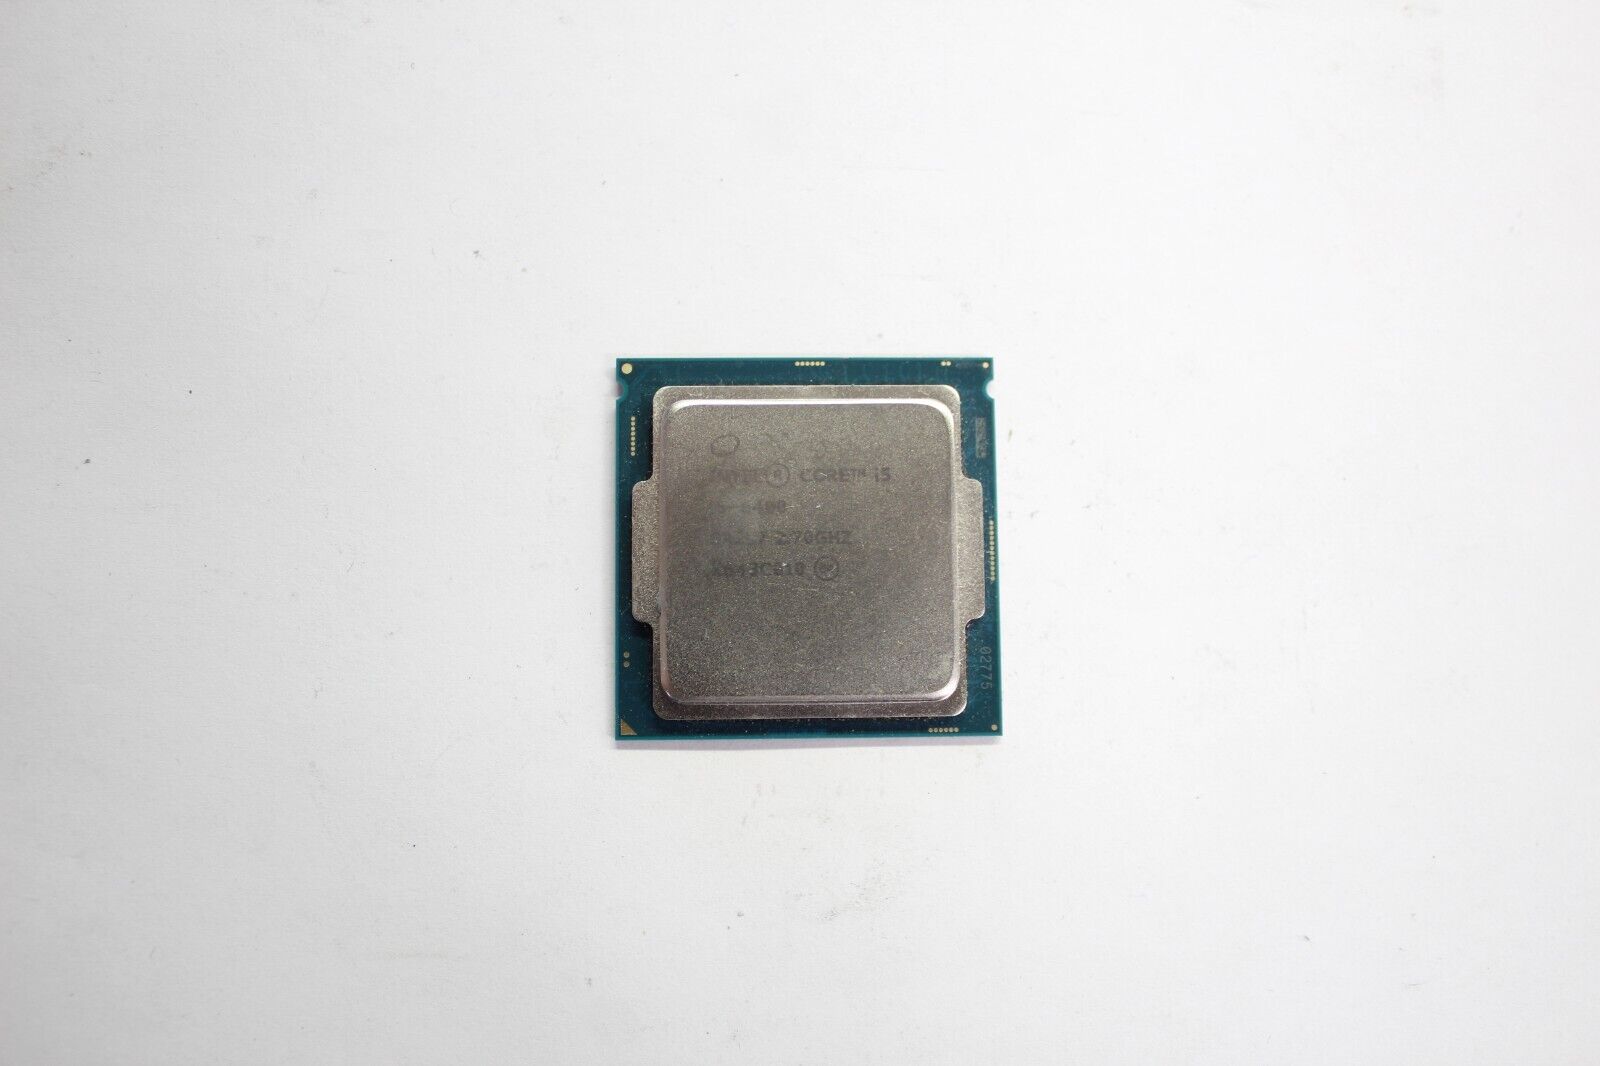 Intel Core Processor i5-6400 2.70GHz SR2L7 Desktop CPU